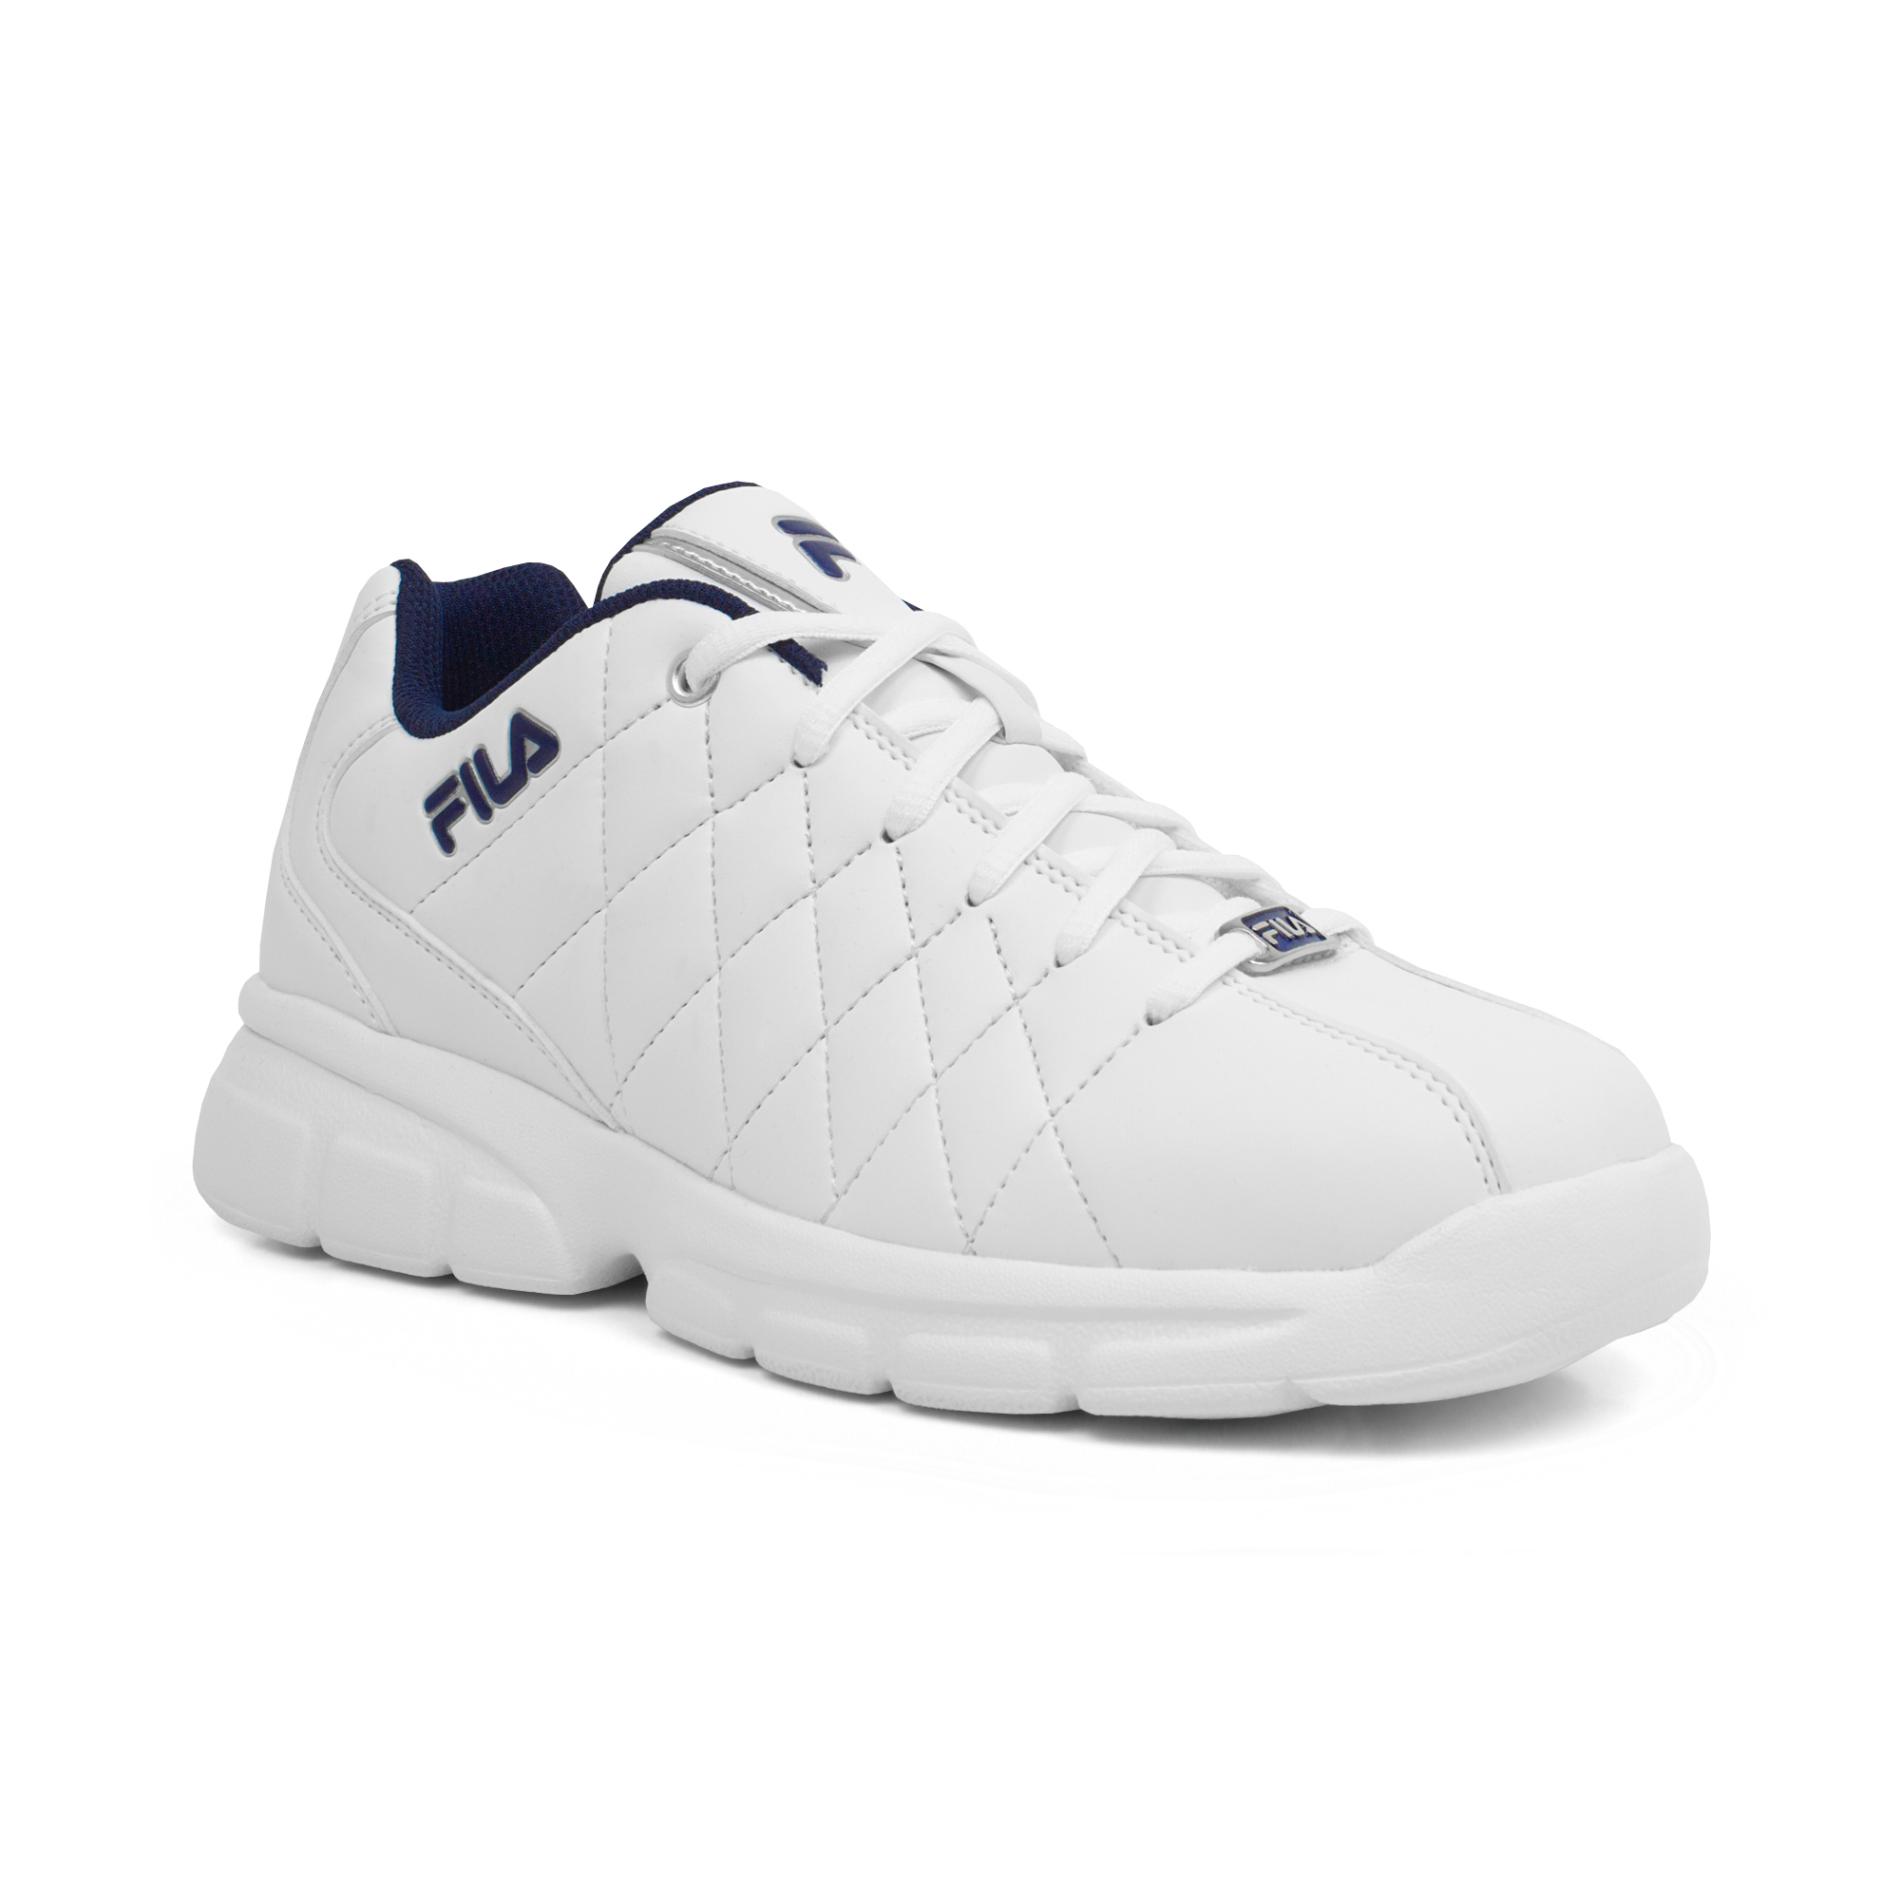 Fila Men's Fulcrum 3 Sneaker - White/Navy